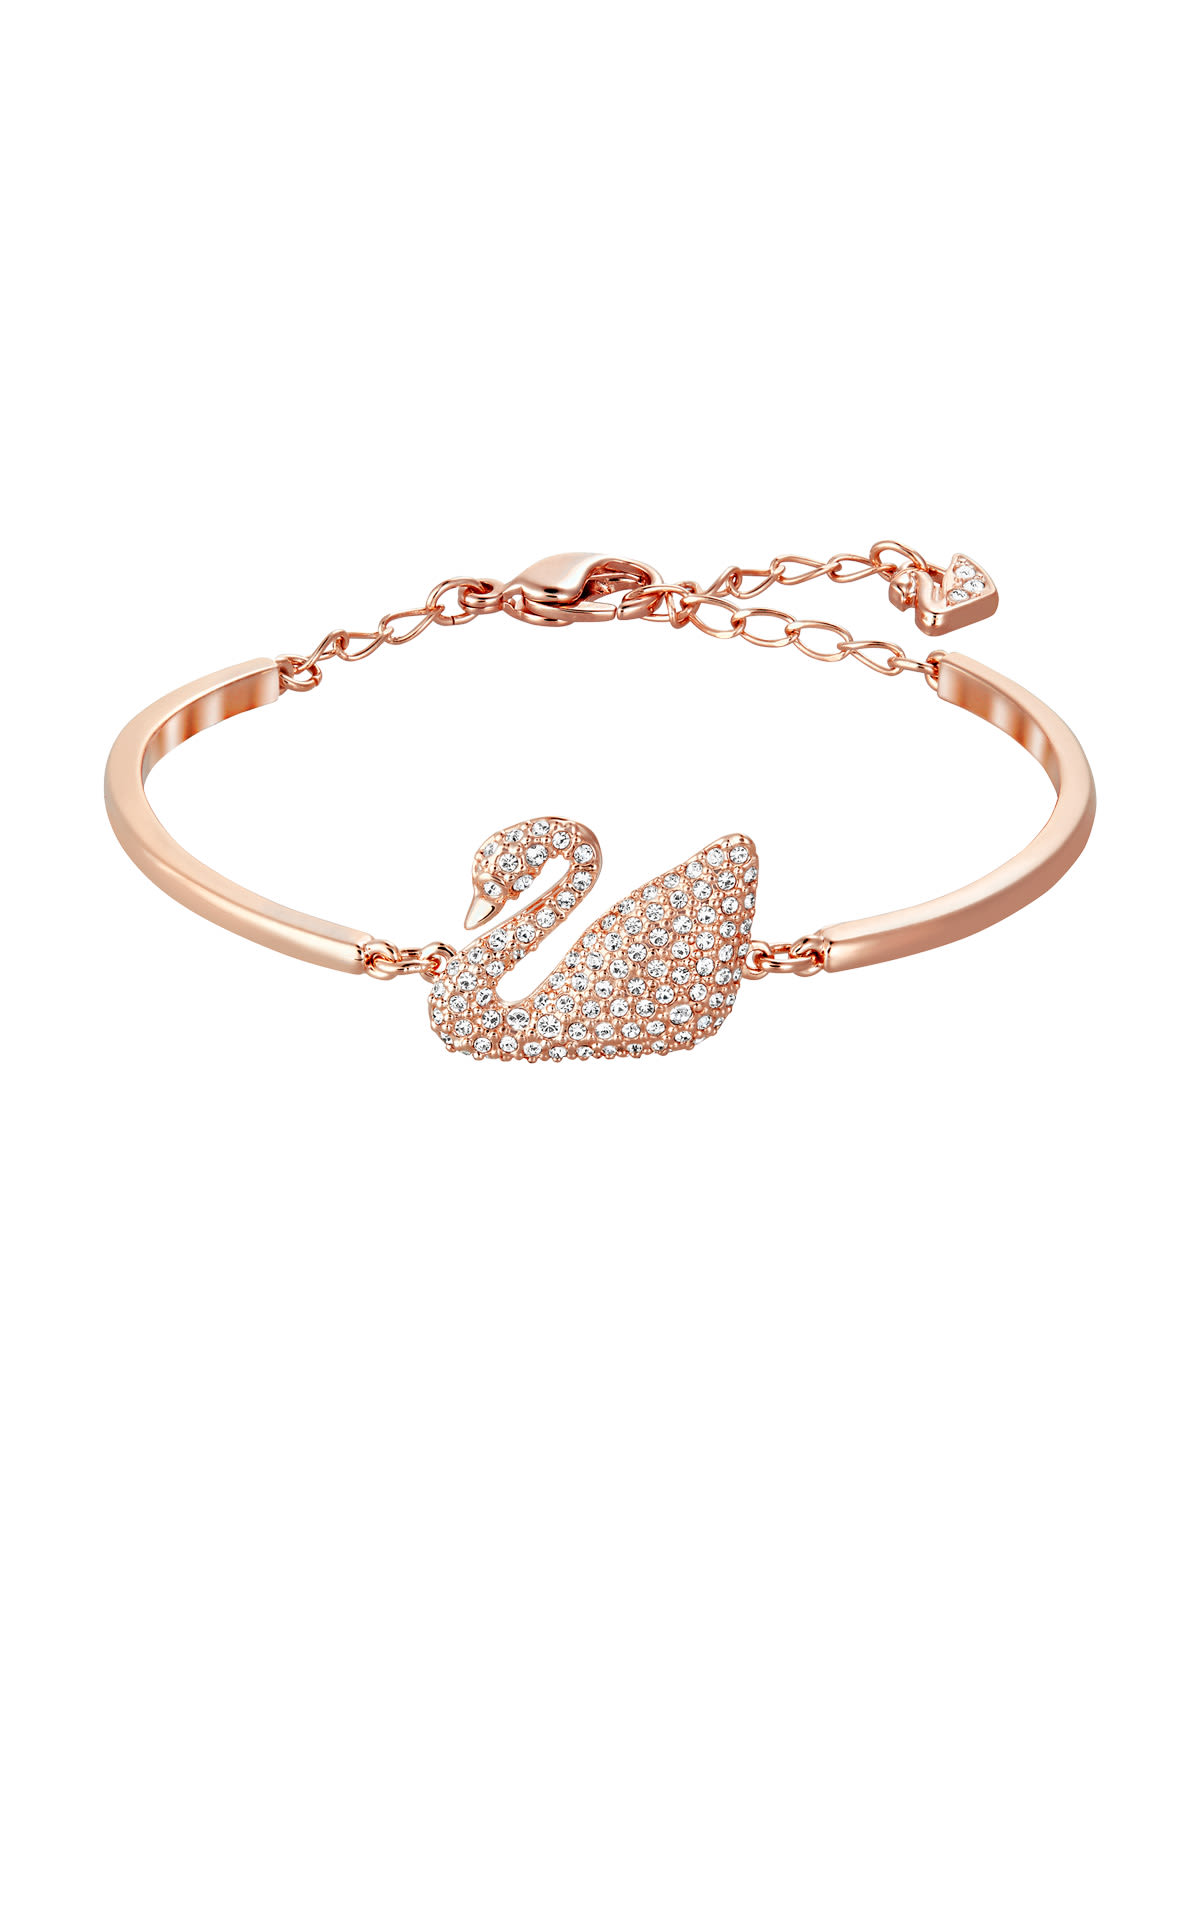 Rose gold bracelet with swan detail Swarovski